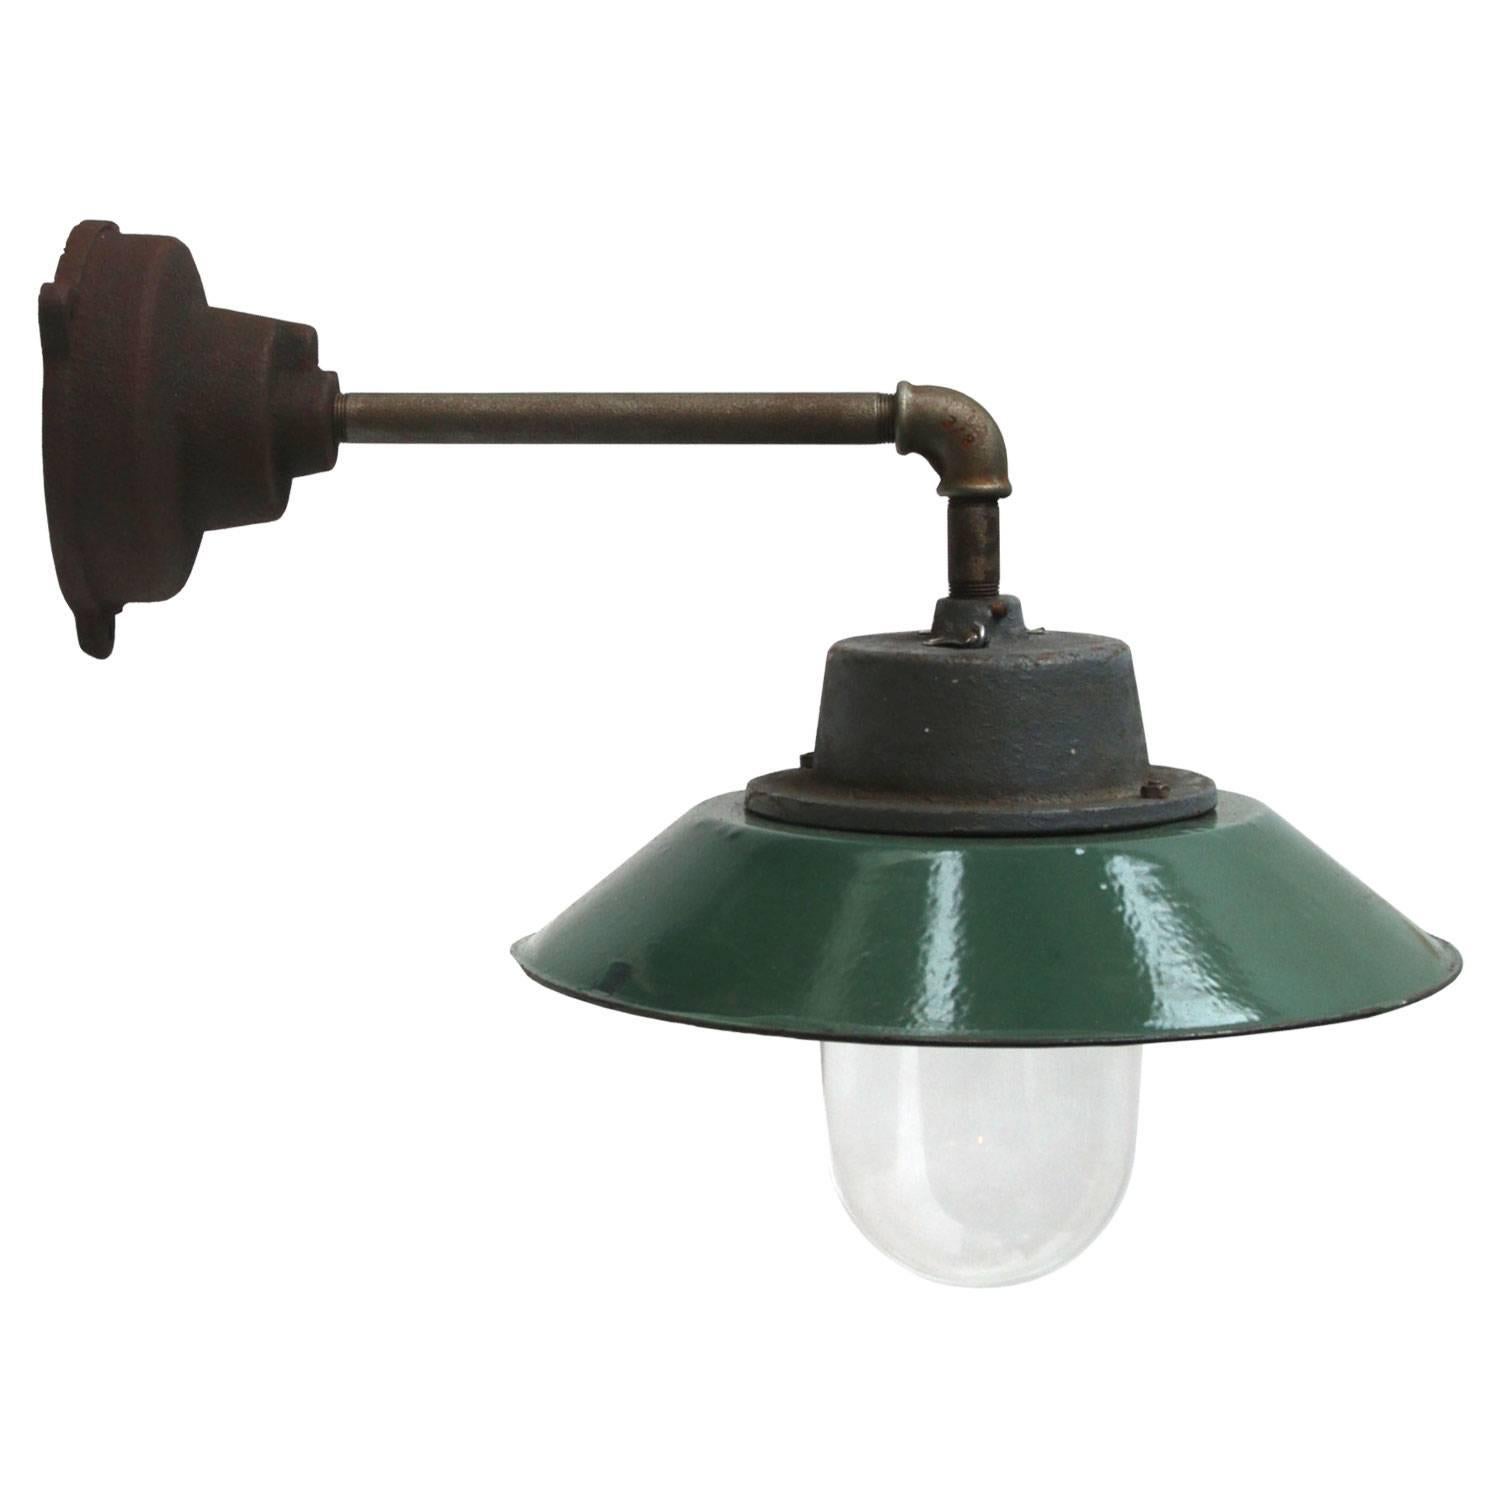 Petrol Enamel Vintage Industrial Wall Lamp Cast Iron Arm Clear Glass